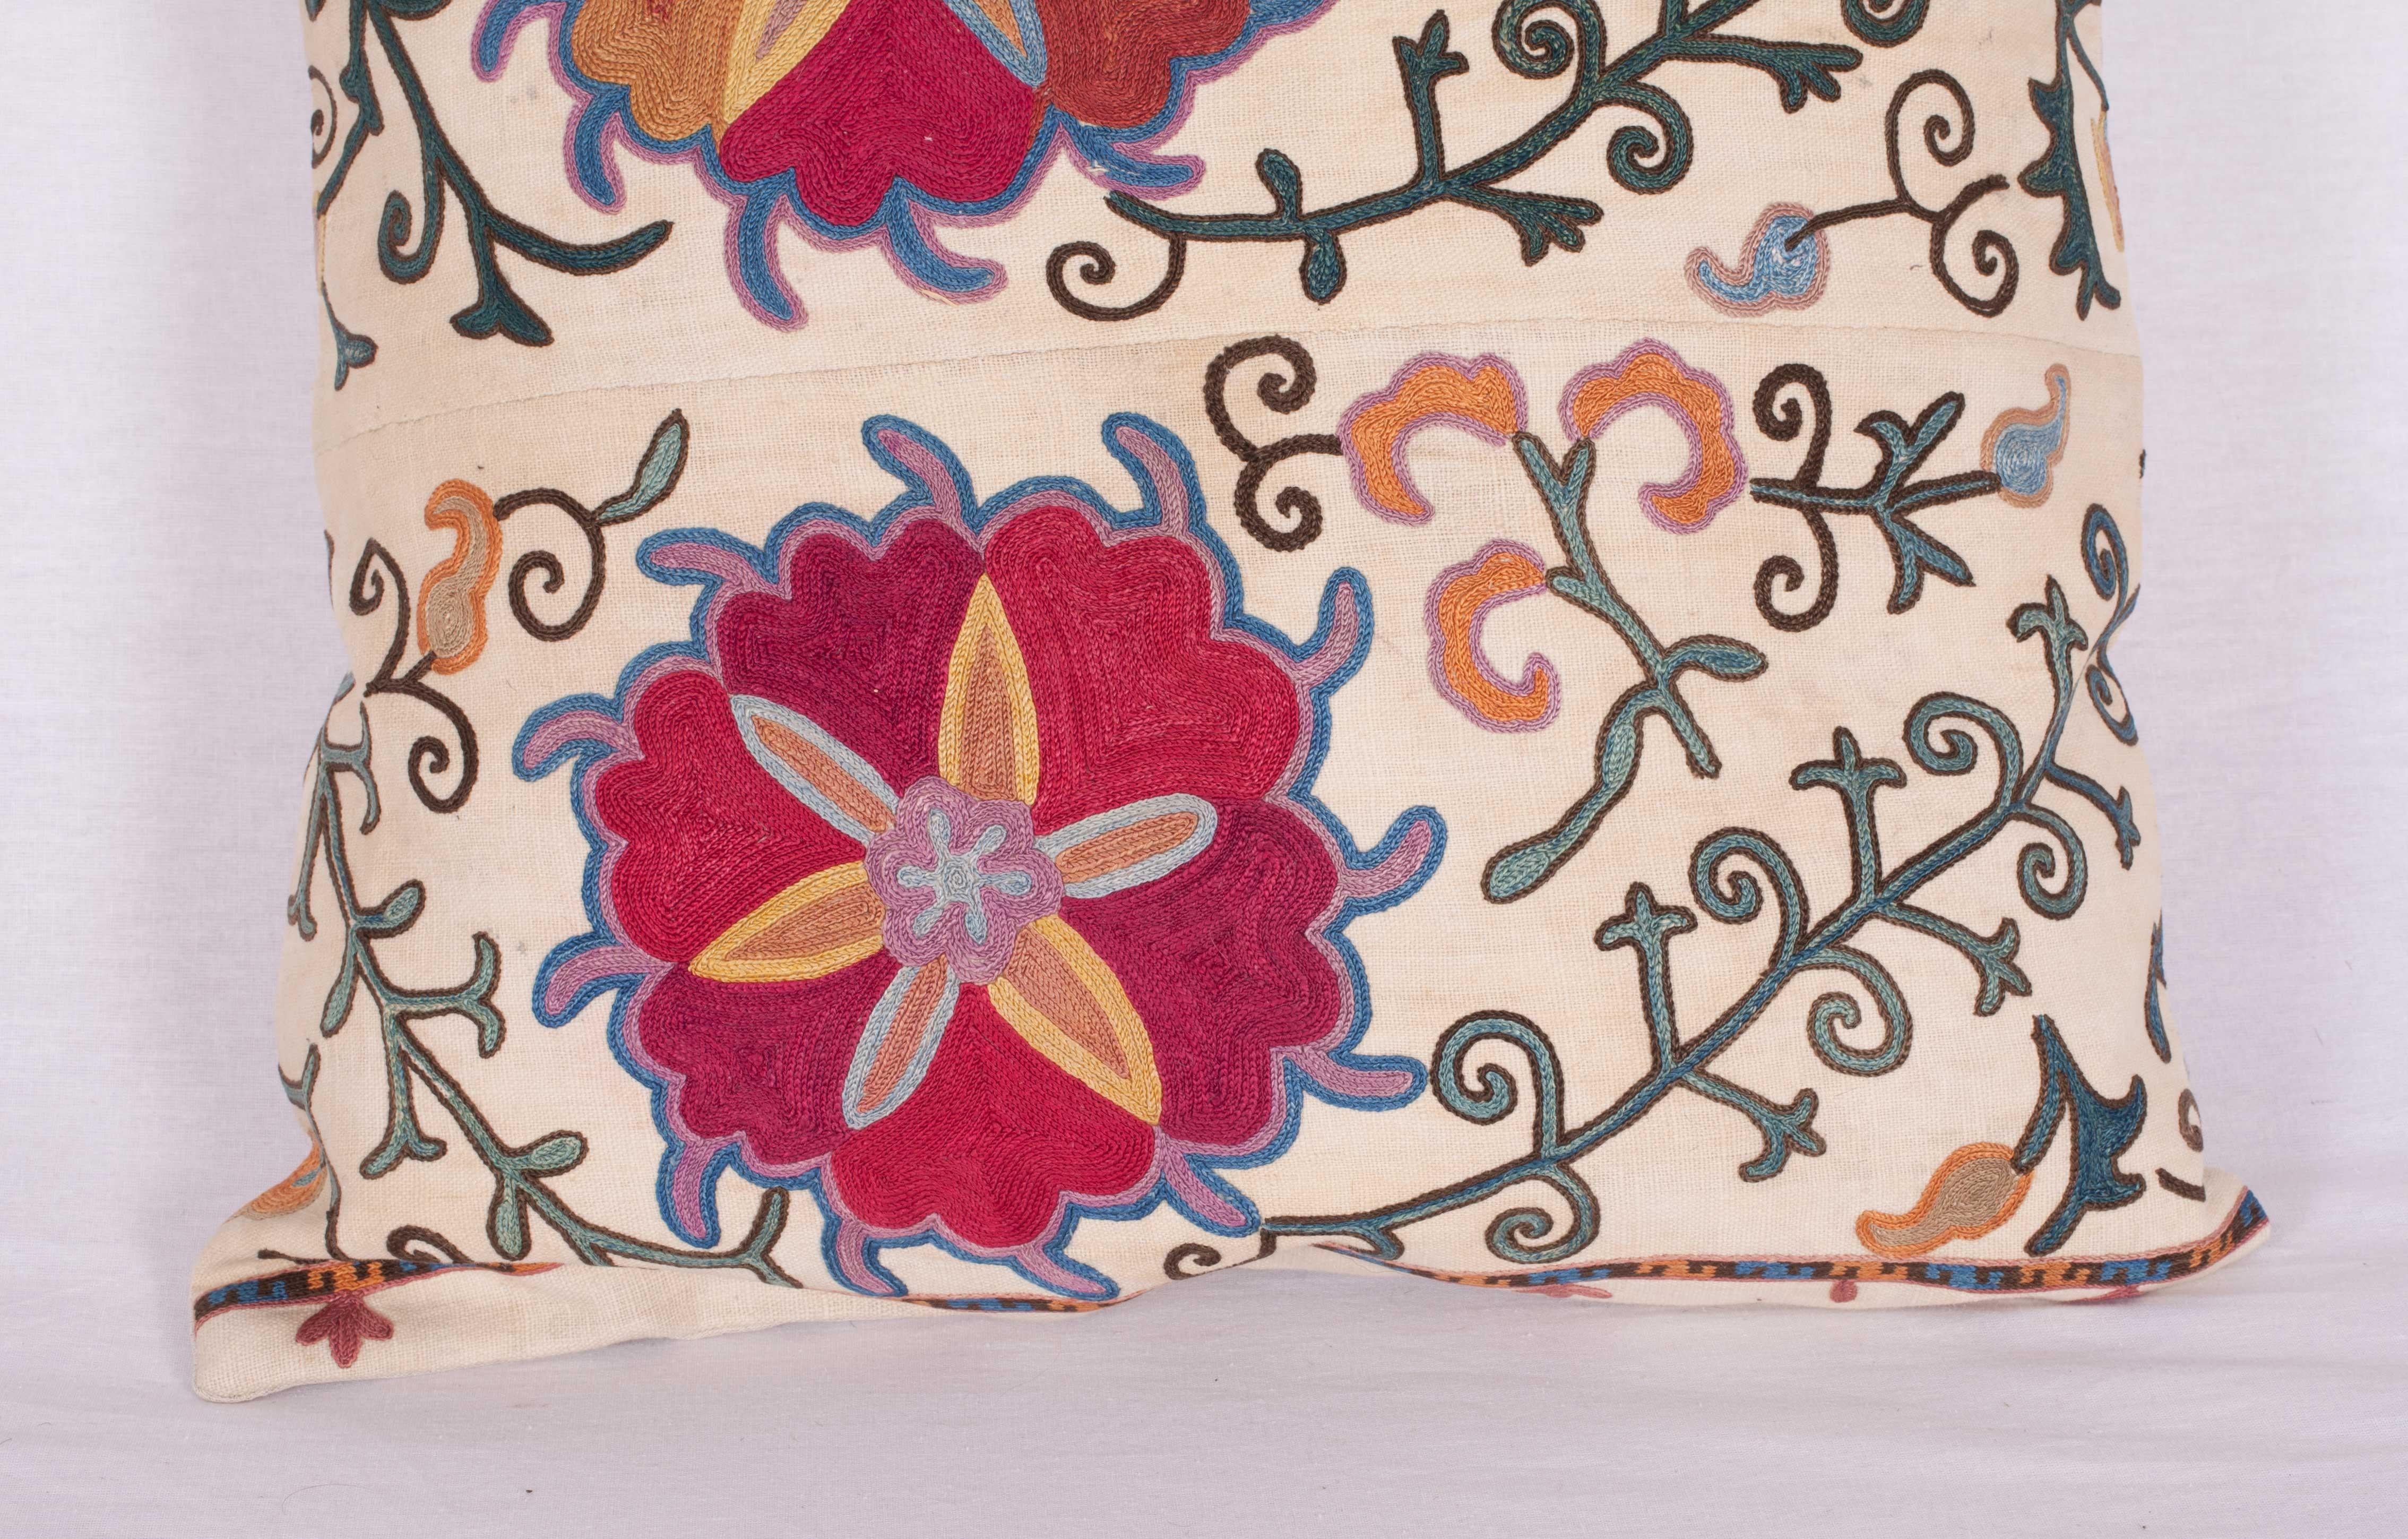 Embroidered Antique Suzani Pillow Fashioned from a 19th Century Uzbek Bukhara Suzani